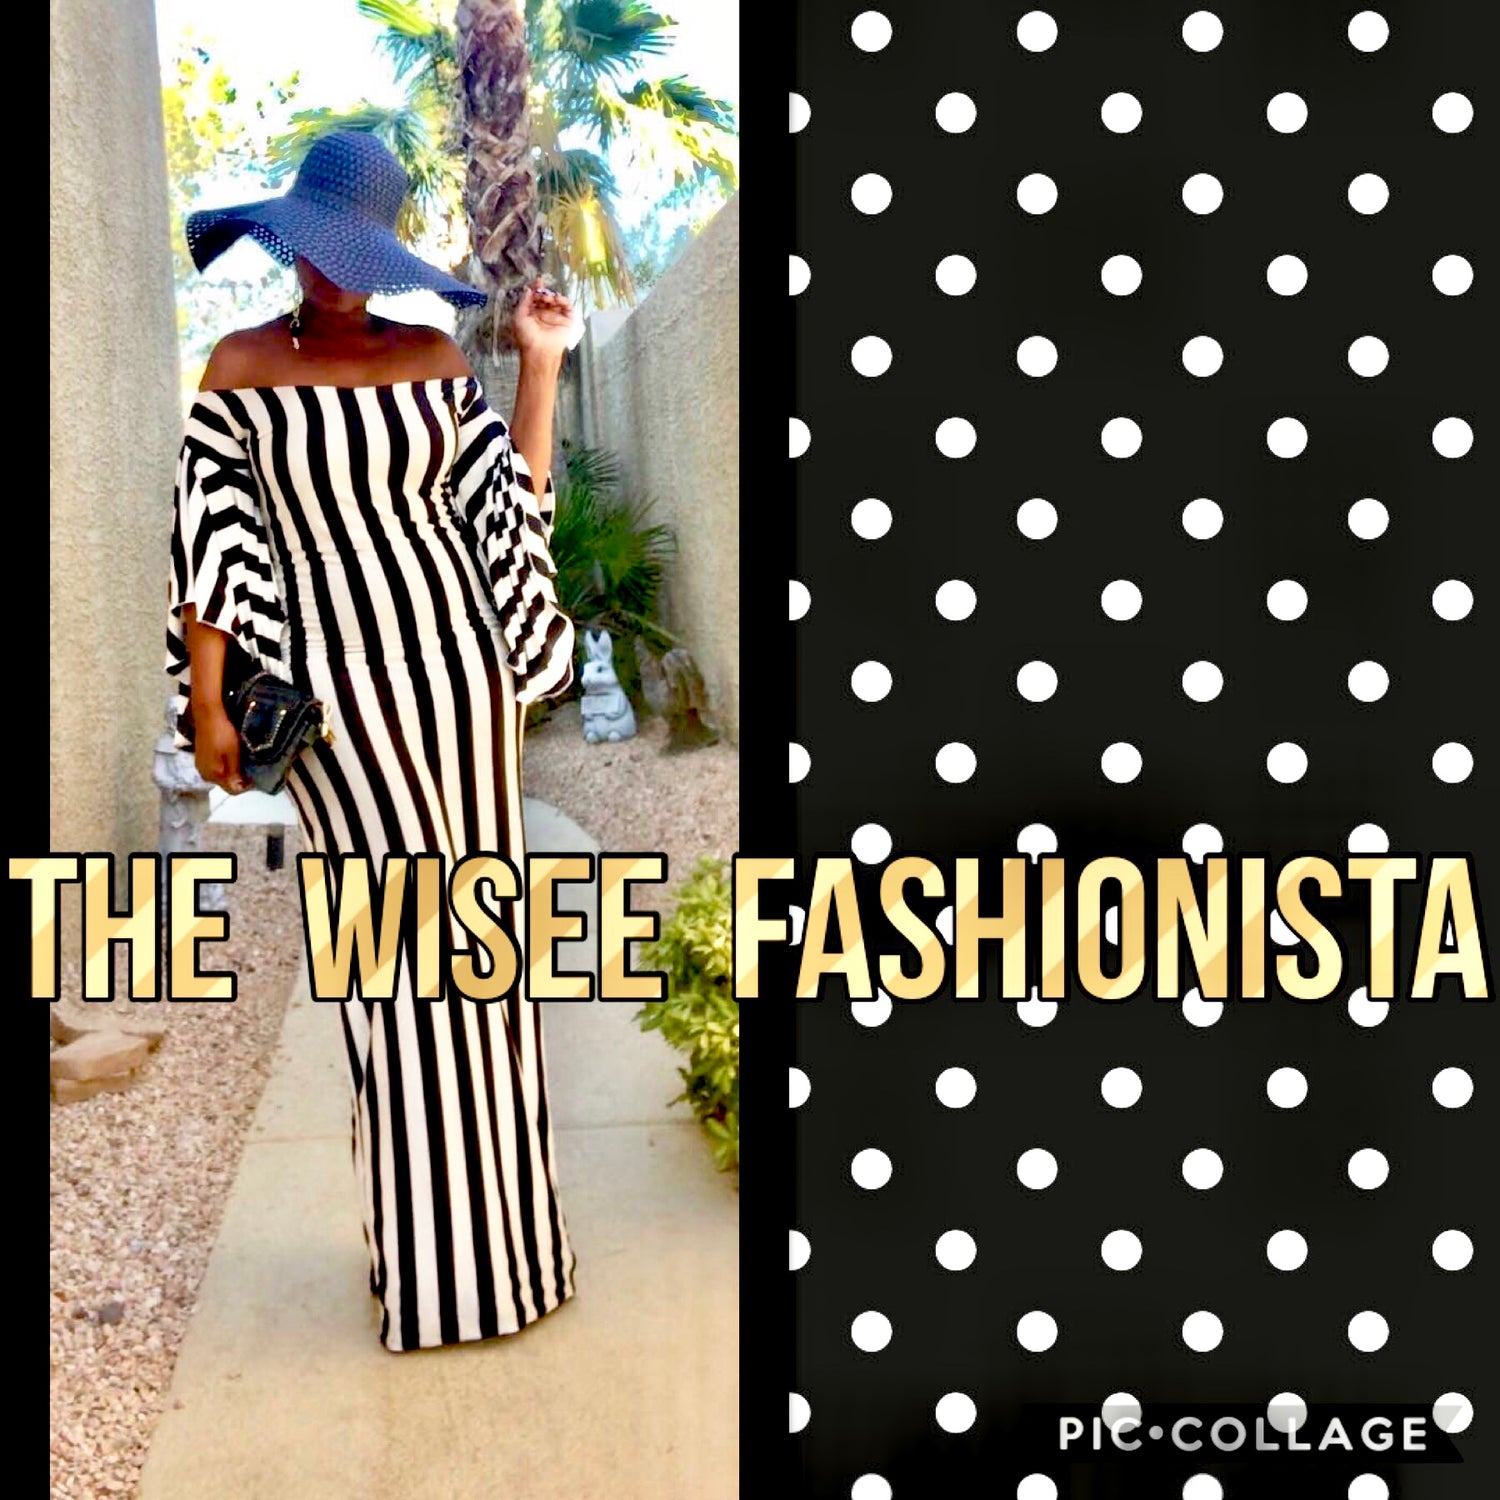 WISEE Fashionista